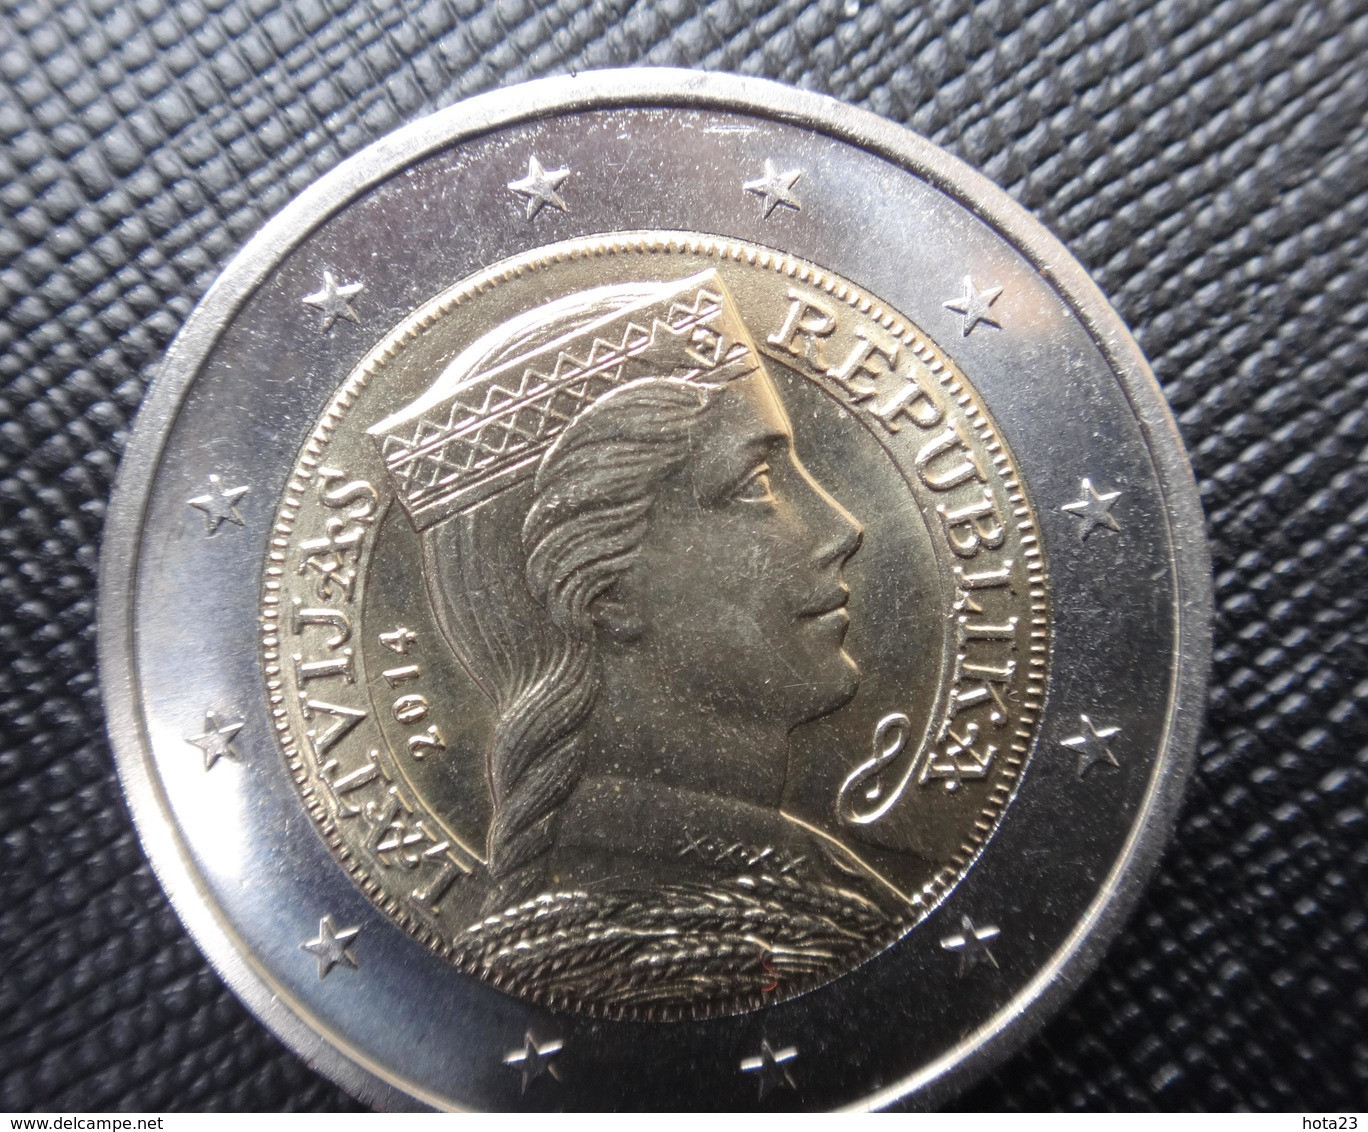 LETTLAND 2 EURO Kursmünze MÜNZEN 2014 Jahre LATVIA COIN  CIRCULATED - Lettonia